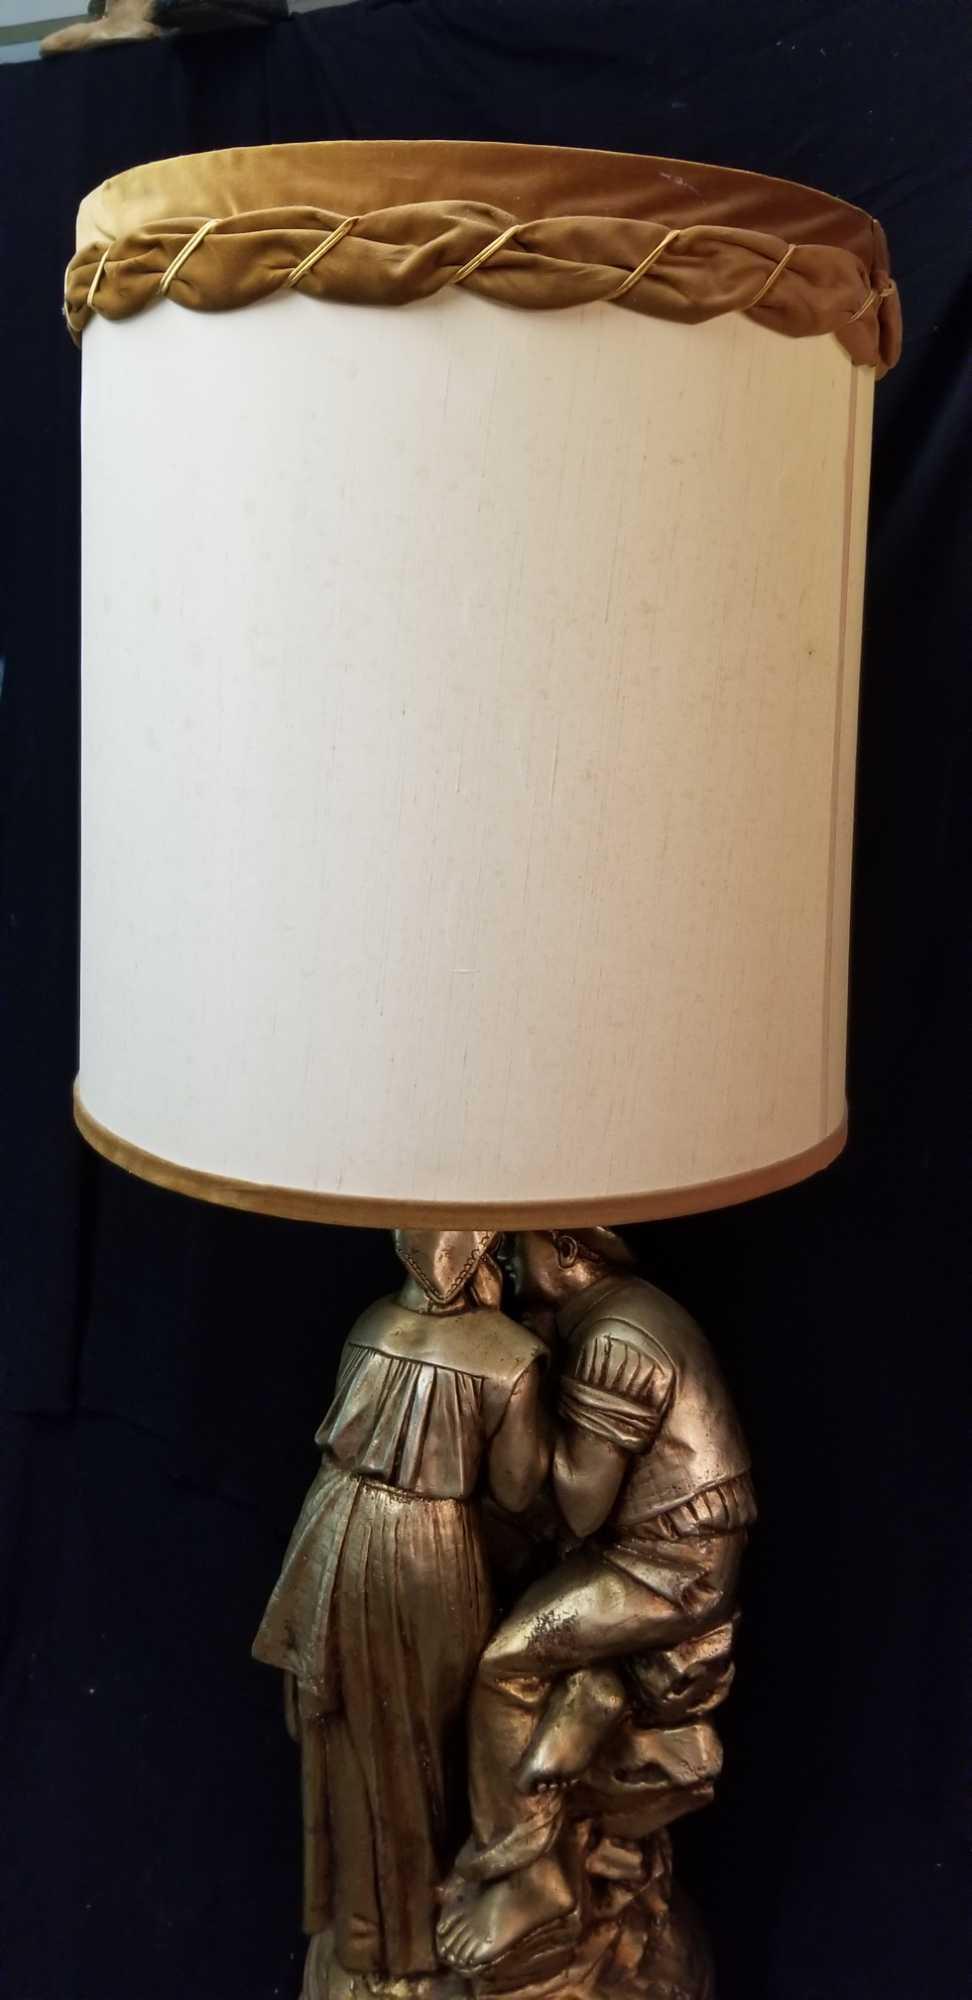 Astonishing replica of Pietro Bazzanti's REBECCA AT THE WELL, 3-way lamp, heavy